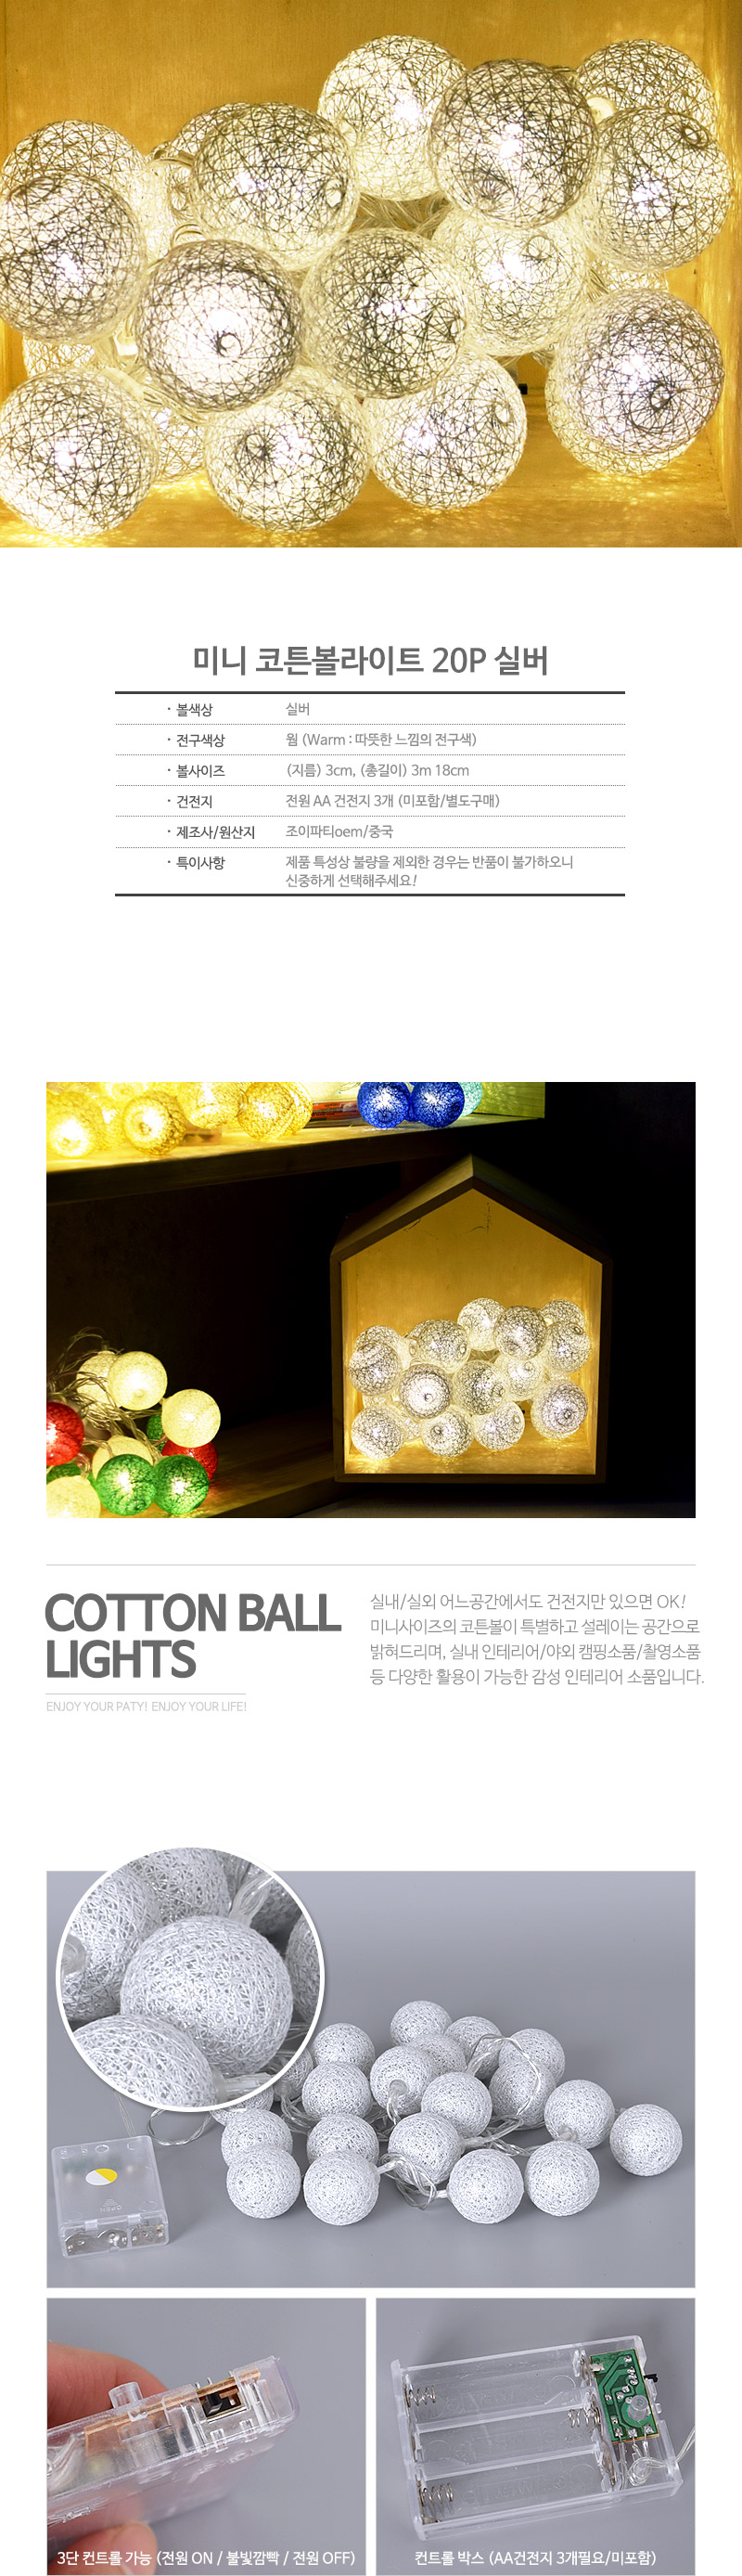 mini_cottonball20p_S_roll.jpg